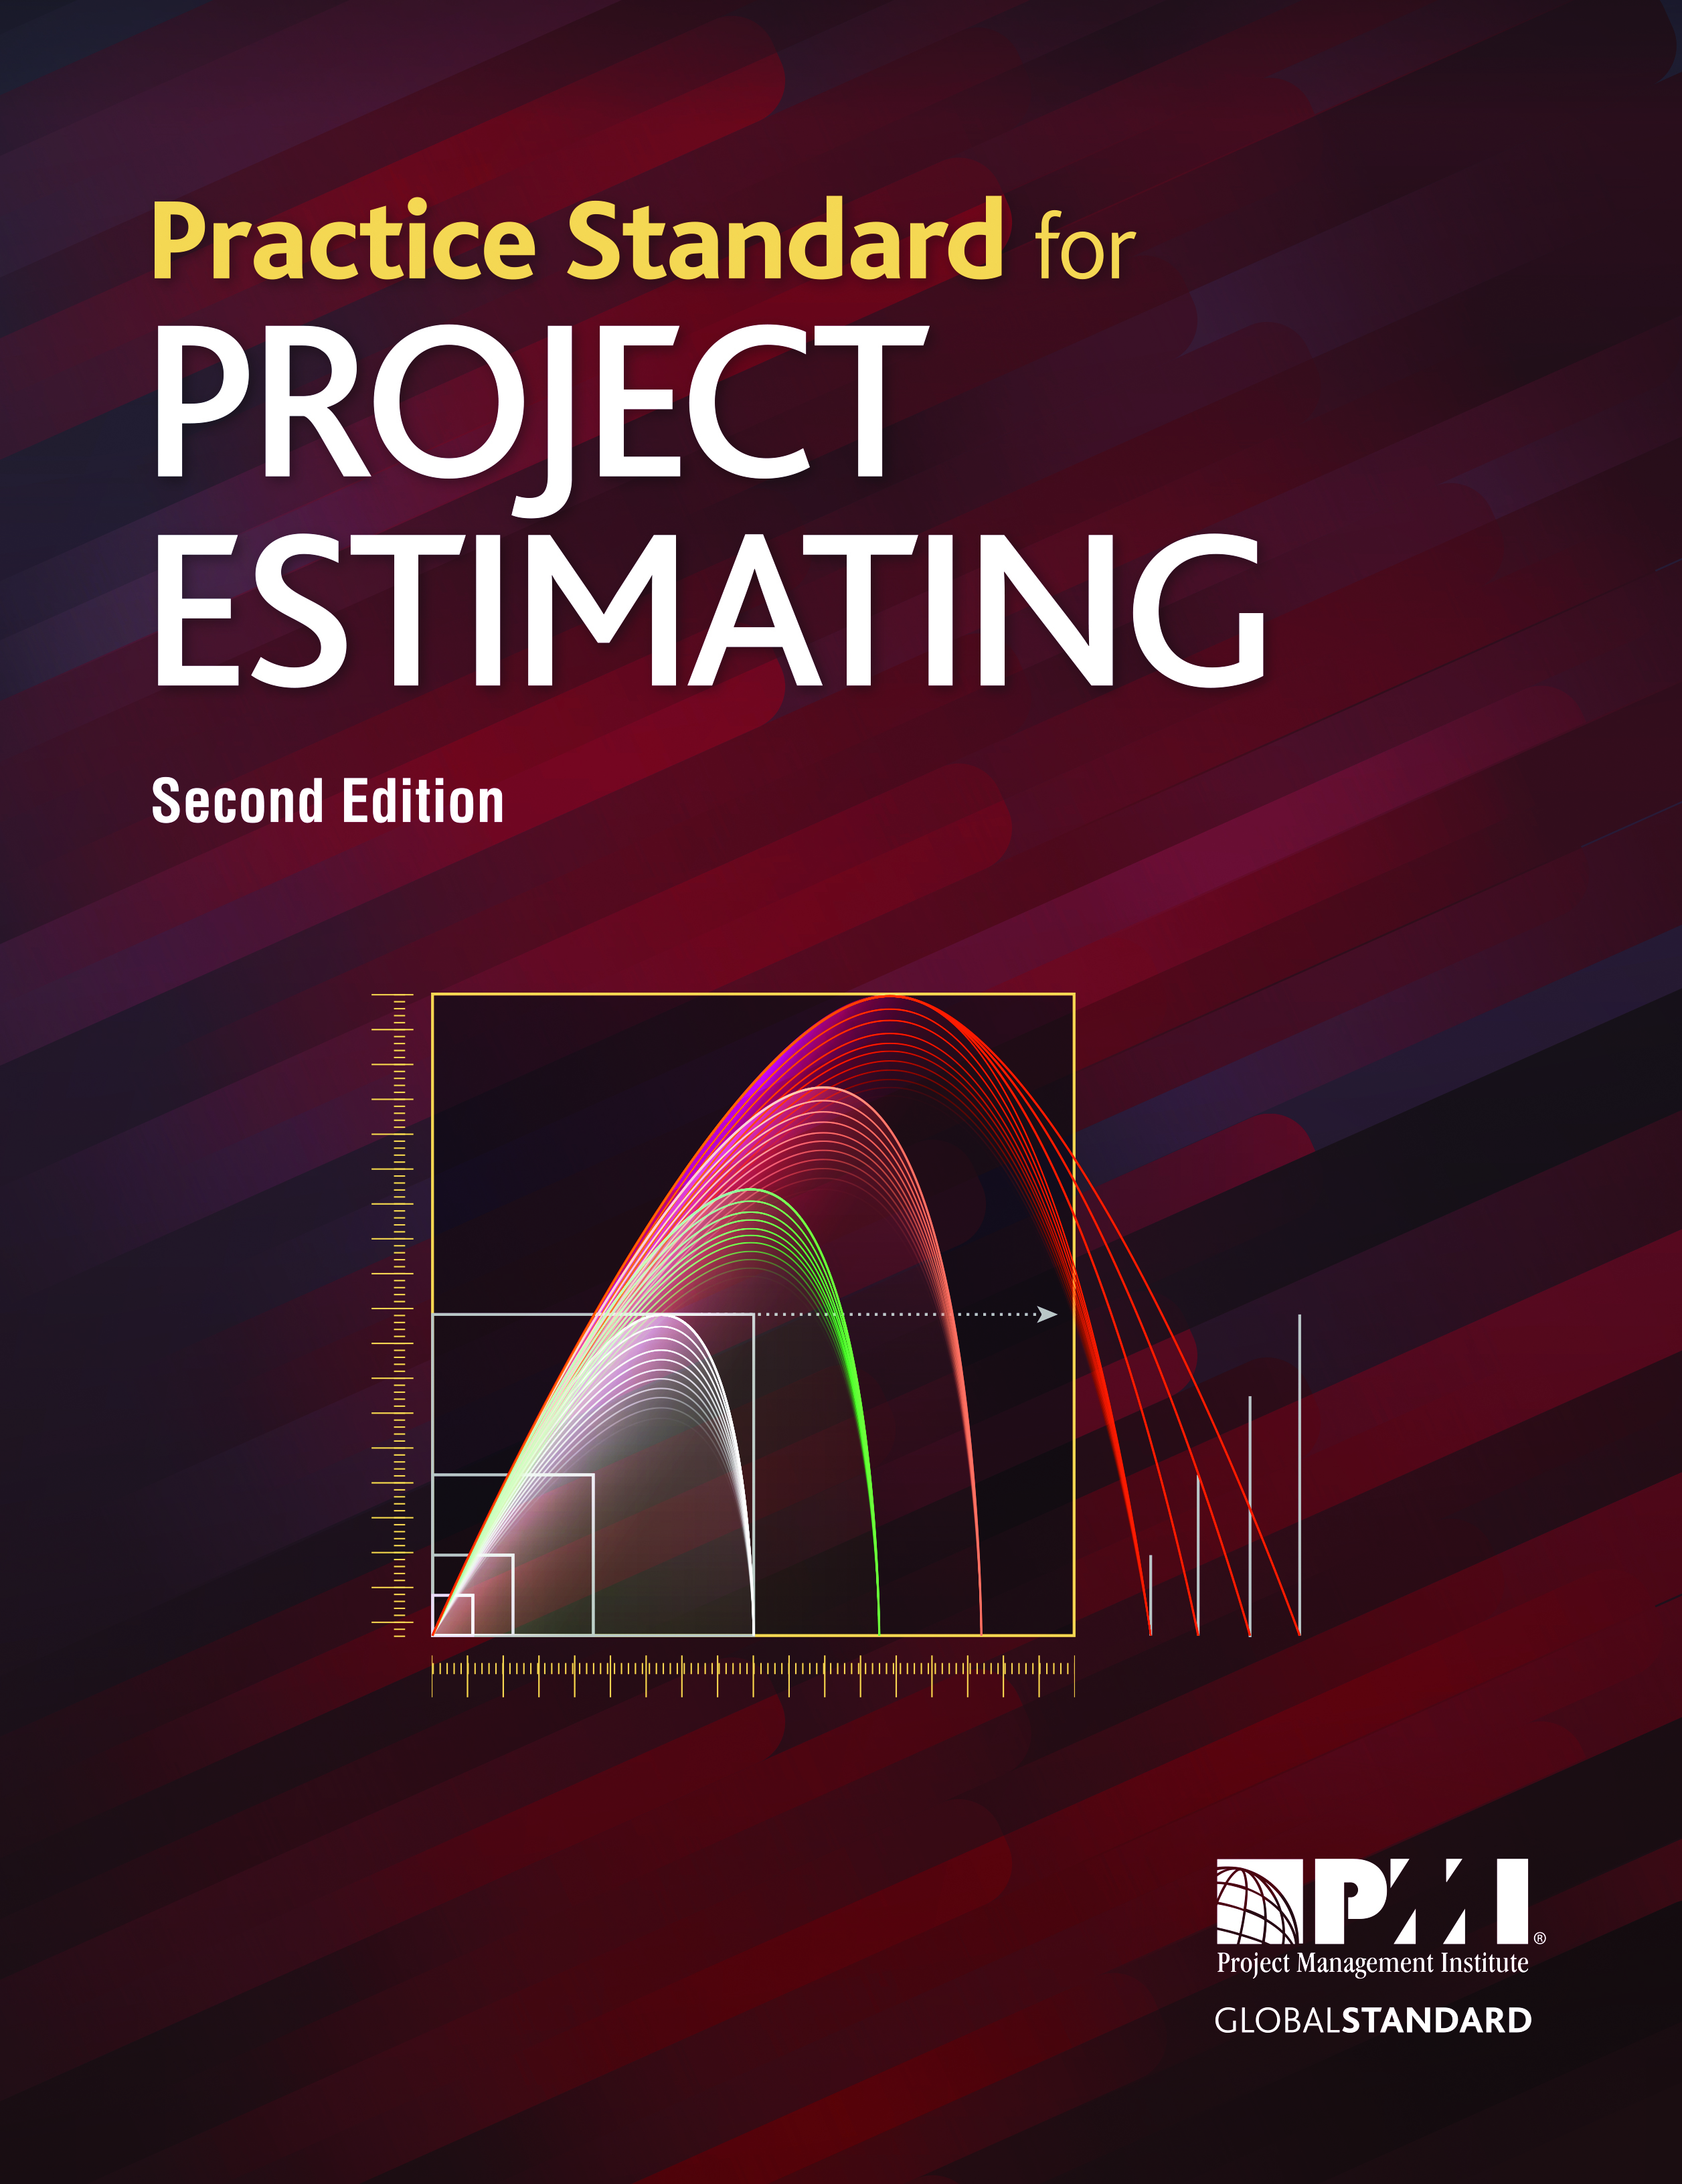 ps-for-project-estimating-v2.jpg